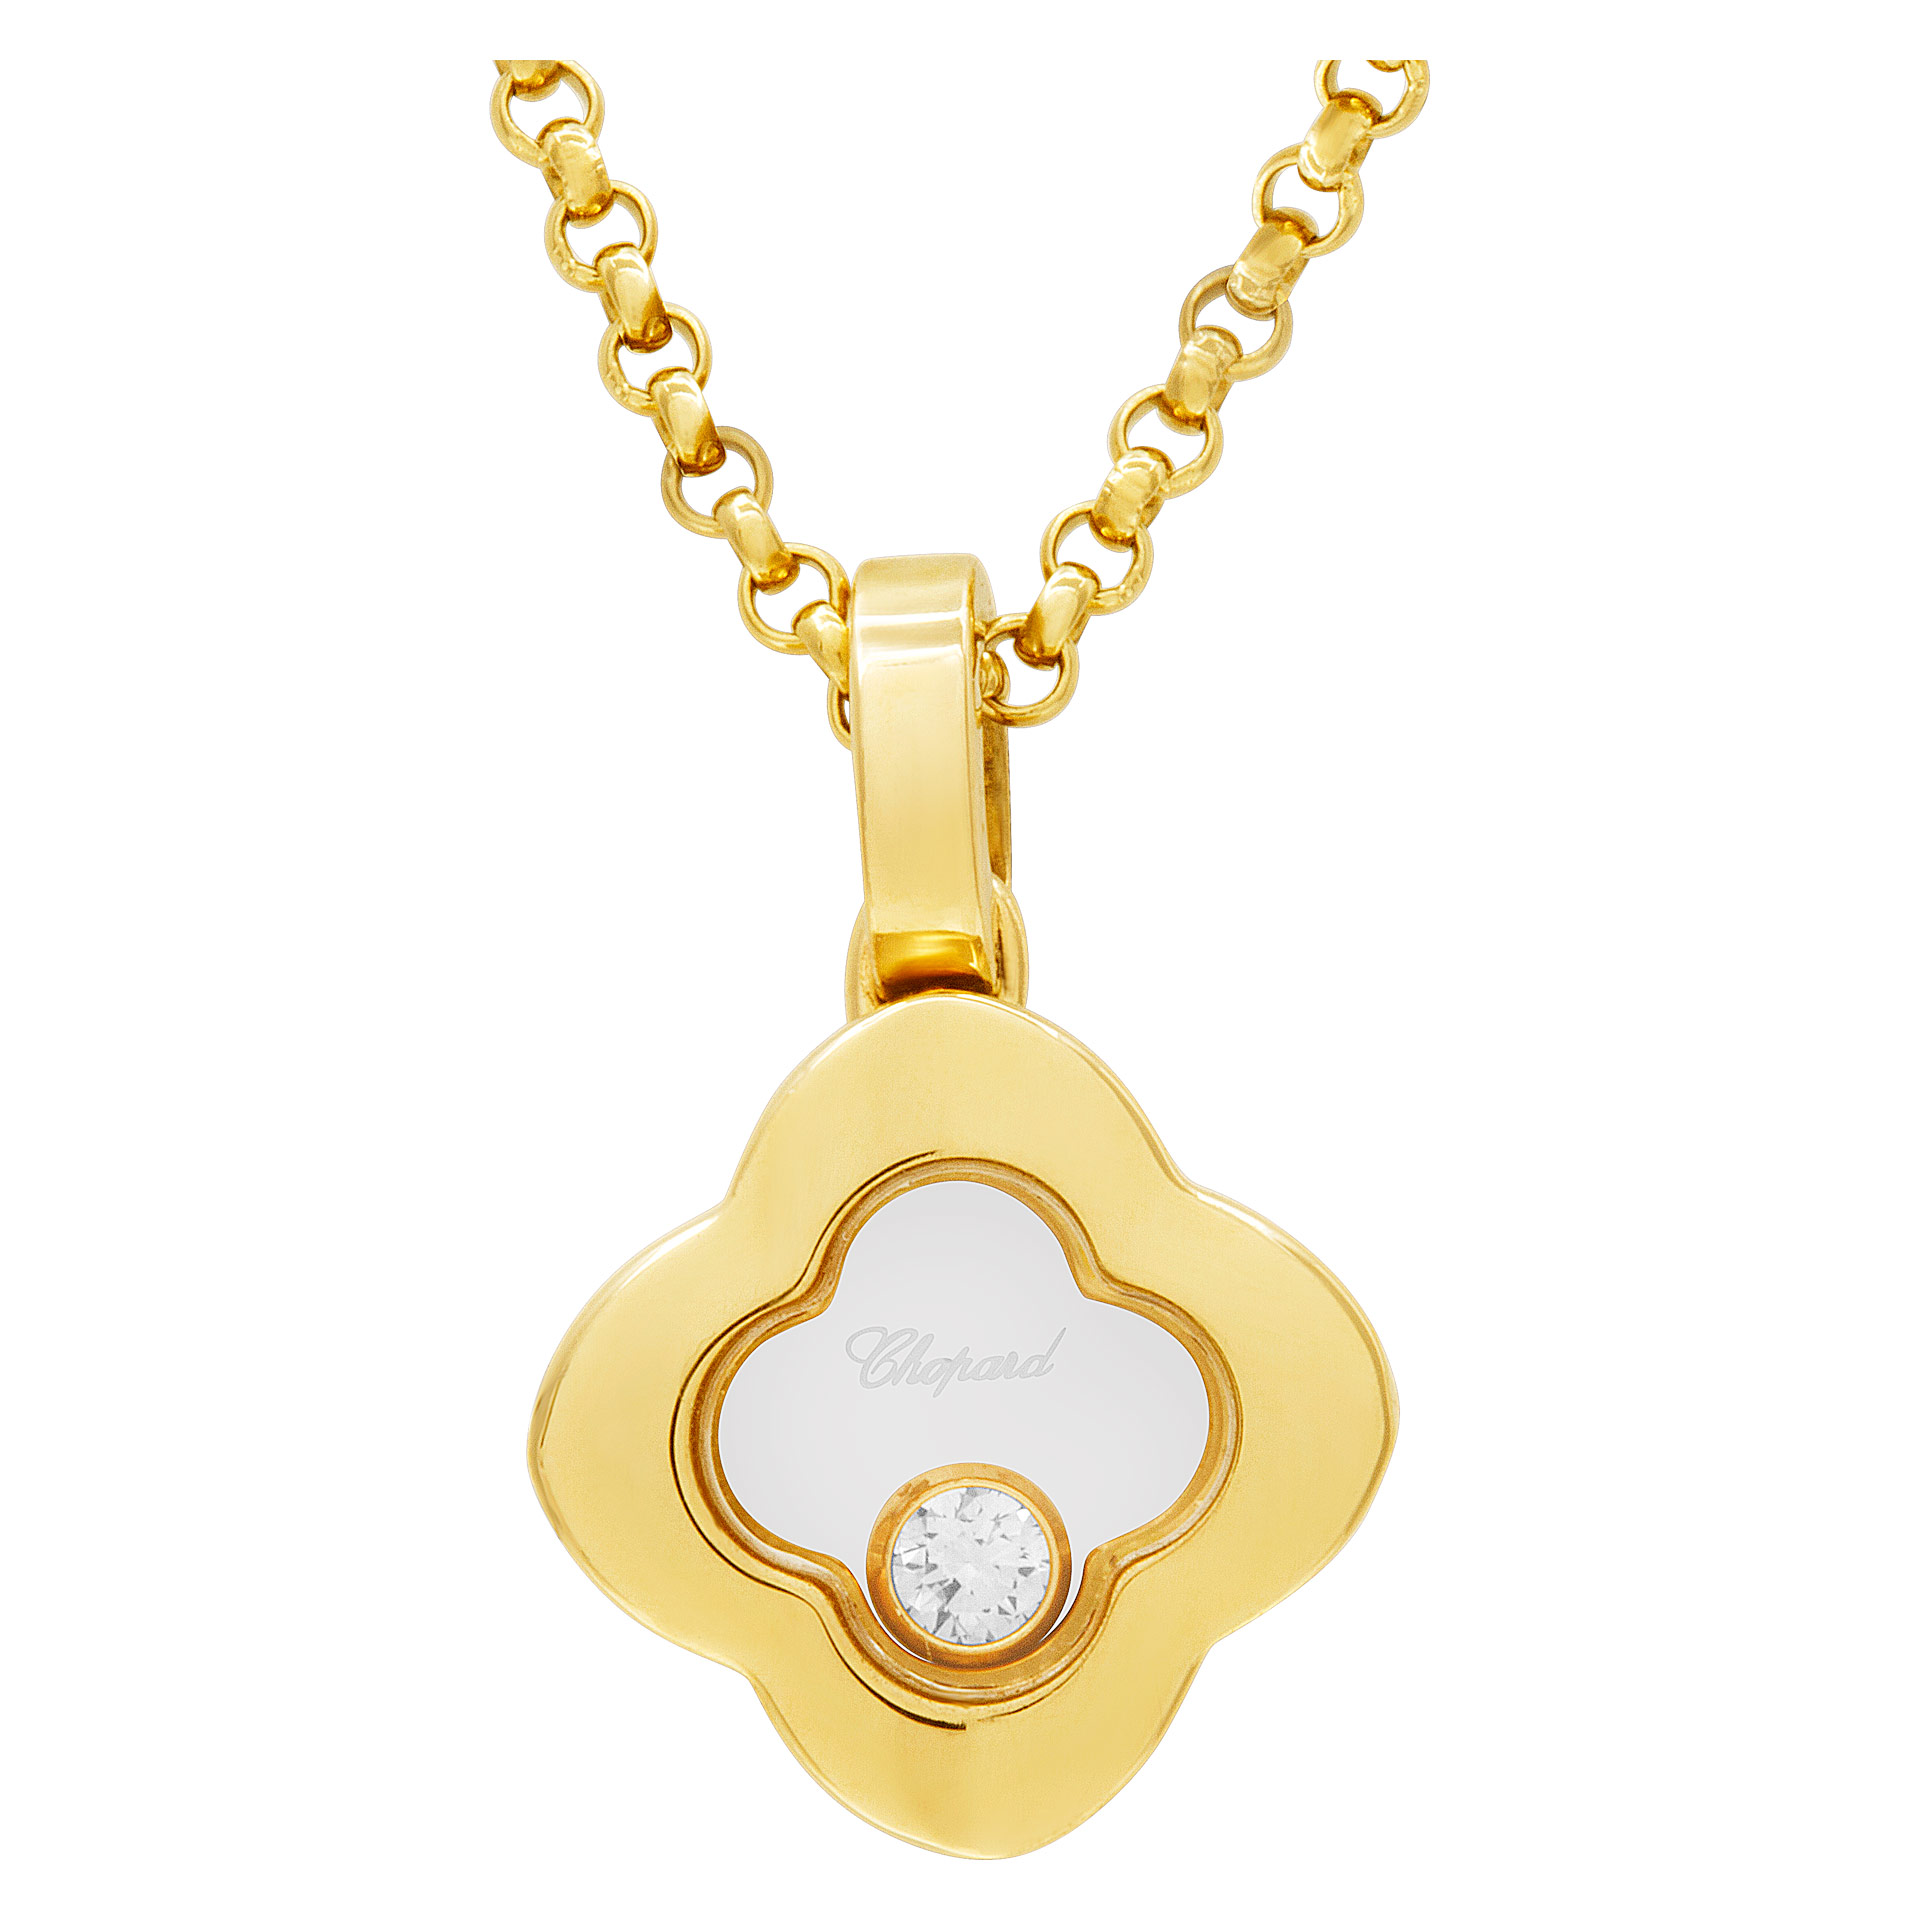 Chopard Happy Diamonds necklace in 18k gold